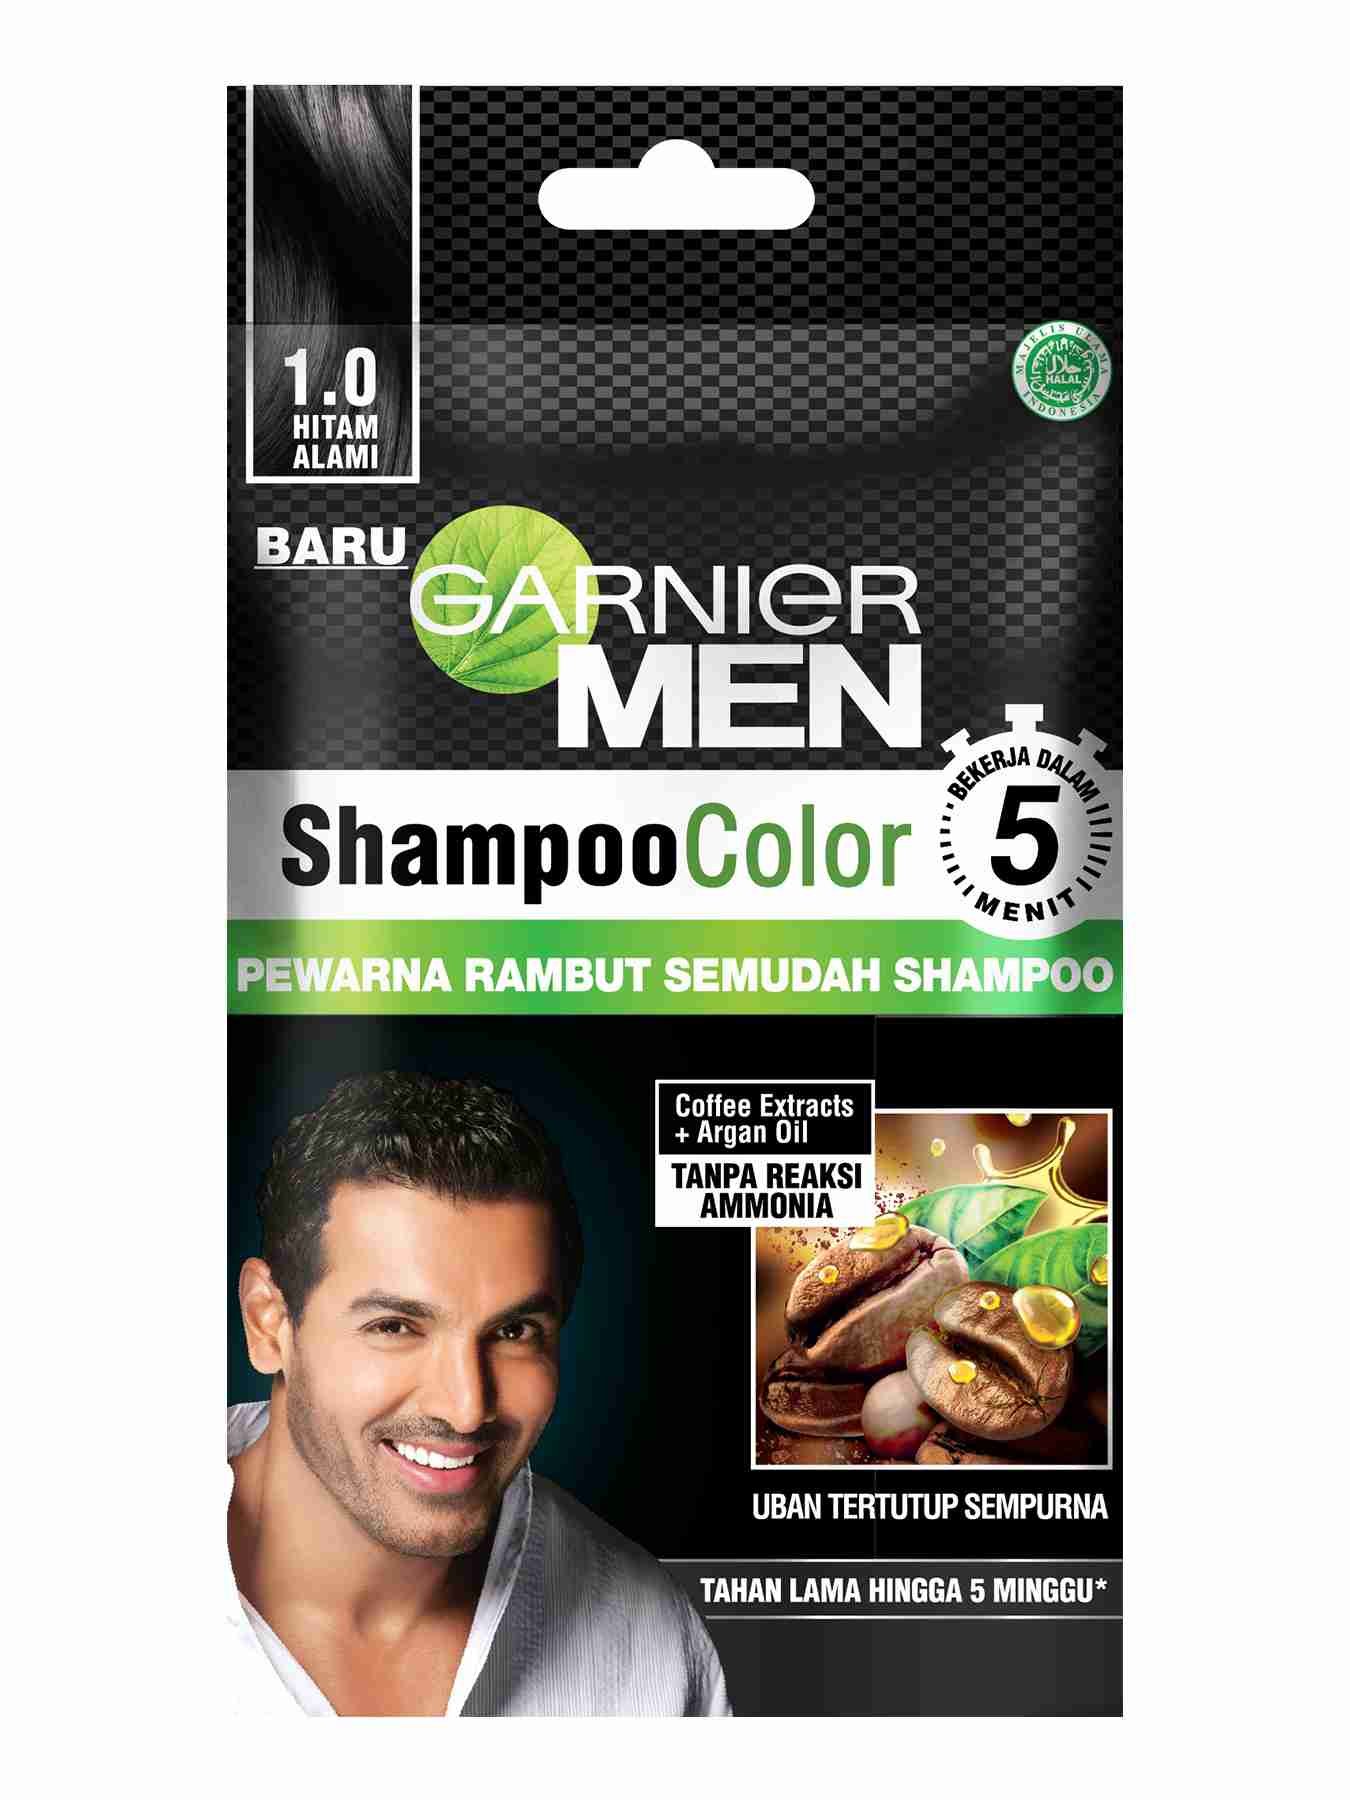 Garnier Men Shampoo Color 1 0 Hitam Alami